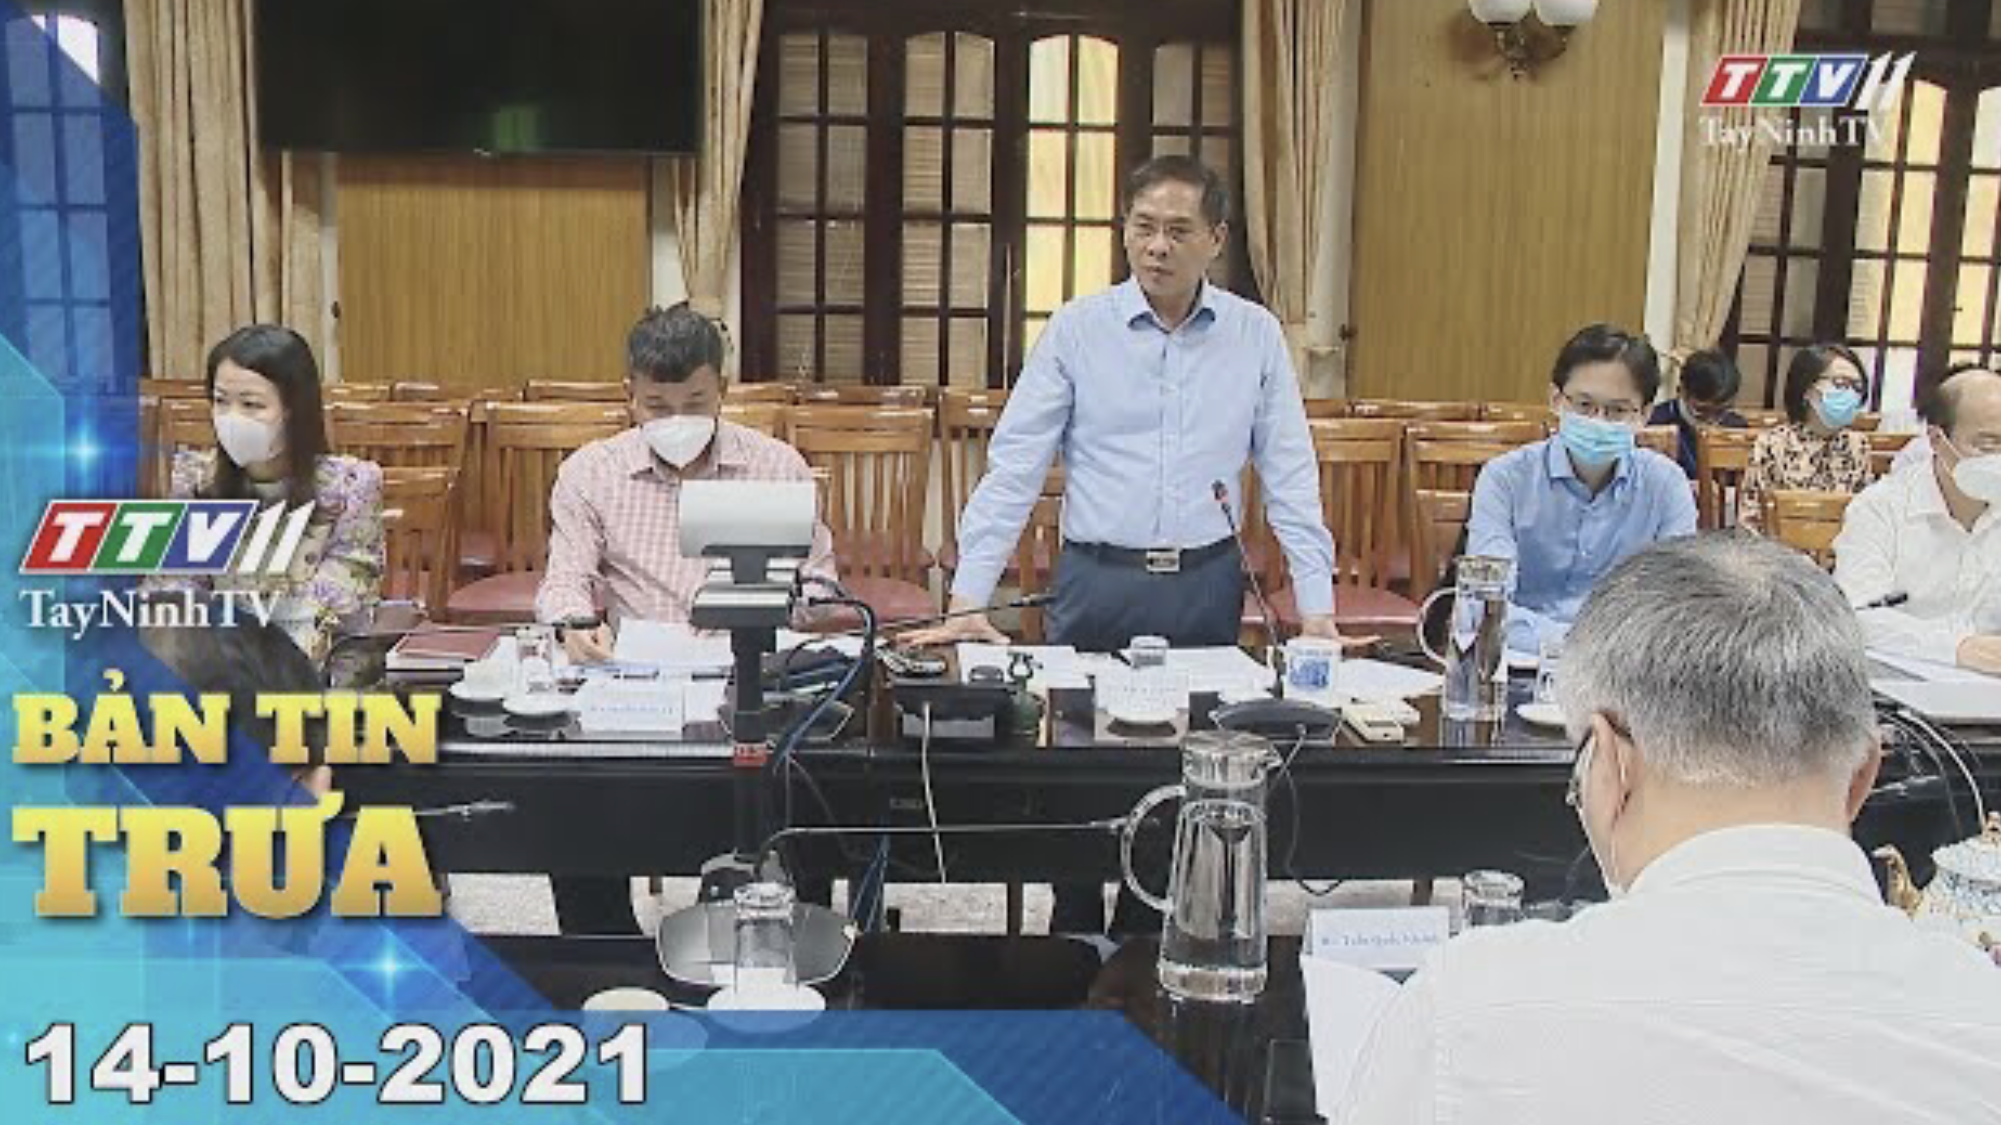 BẢN TIN TRƯA 14/10/2021 | Tin tức hôm nay | TayNinhTV